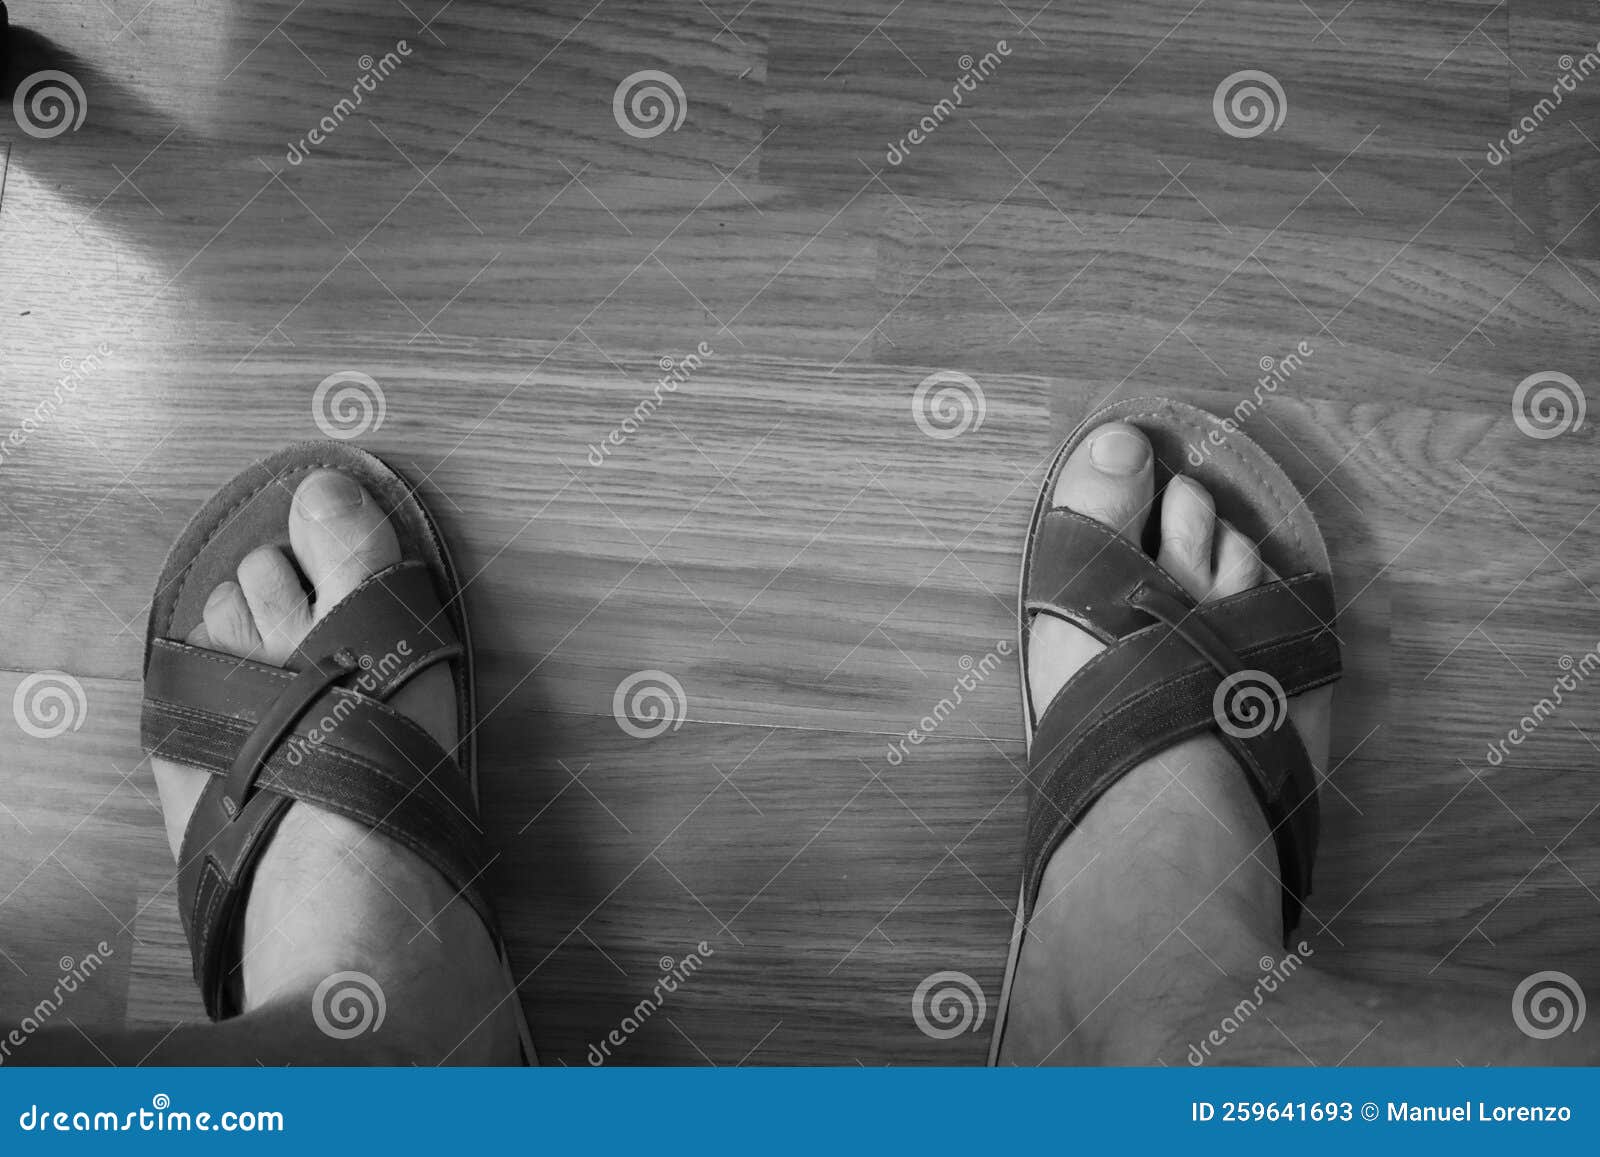 beautiful traditional sandals cool summer heat feet curious man